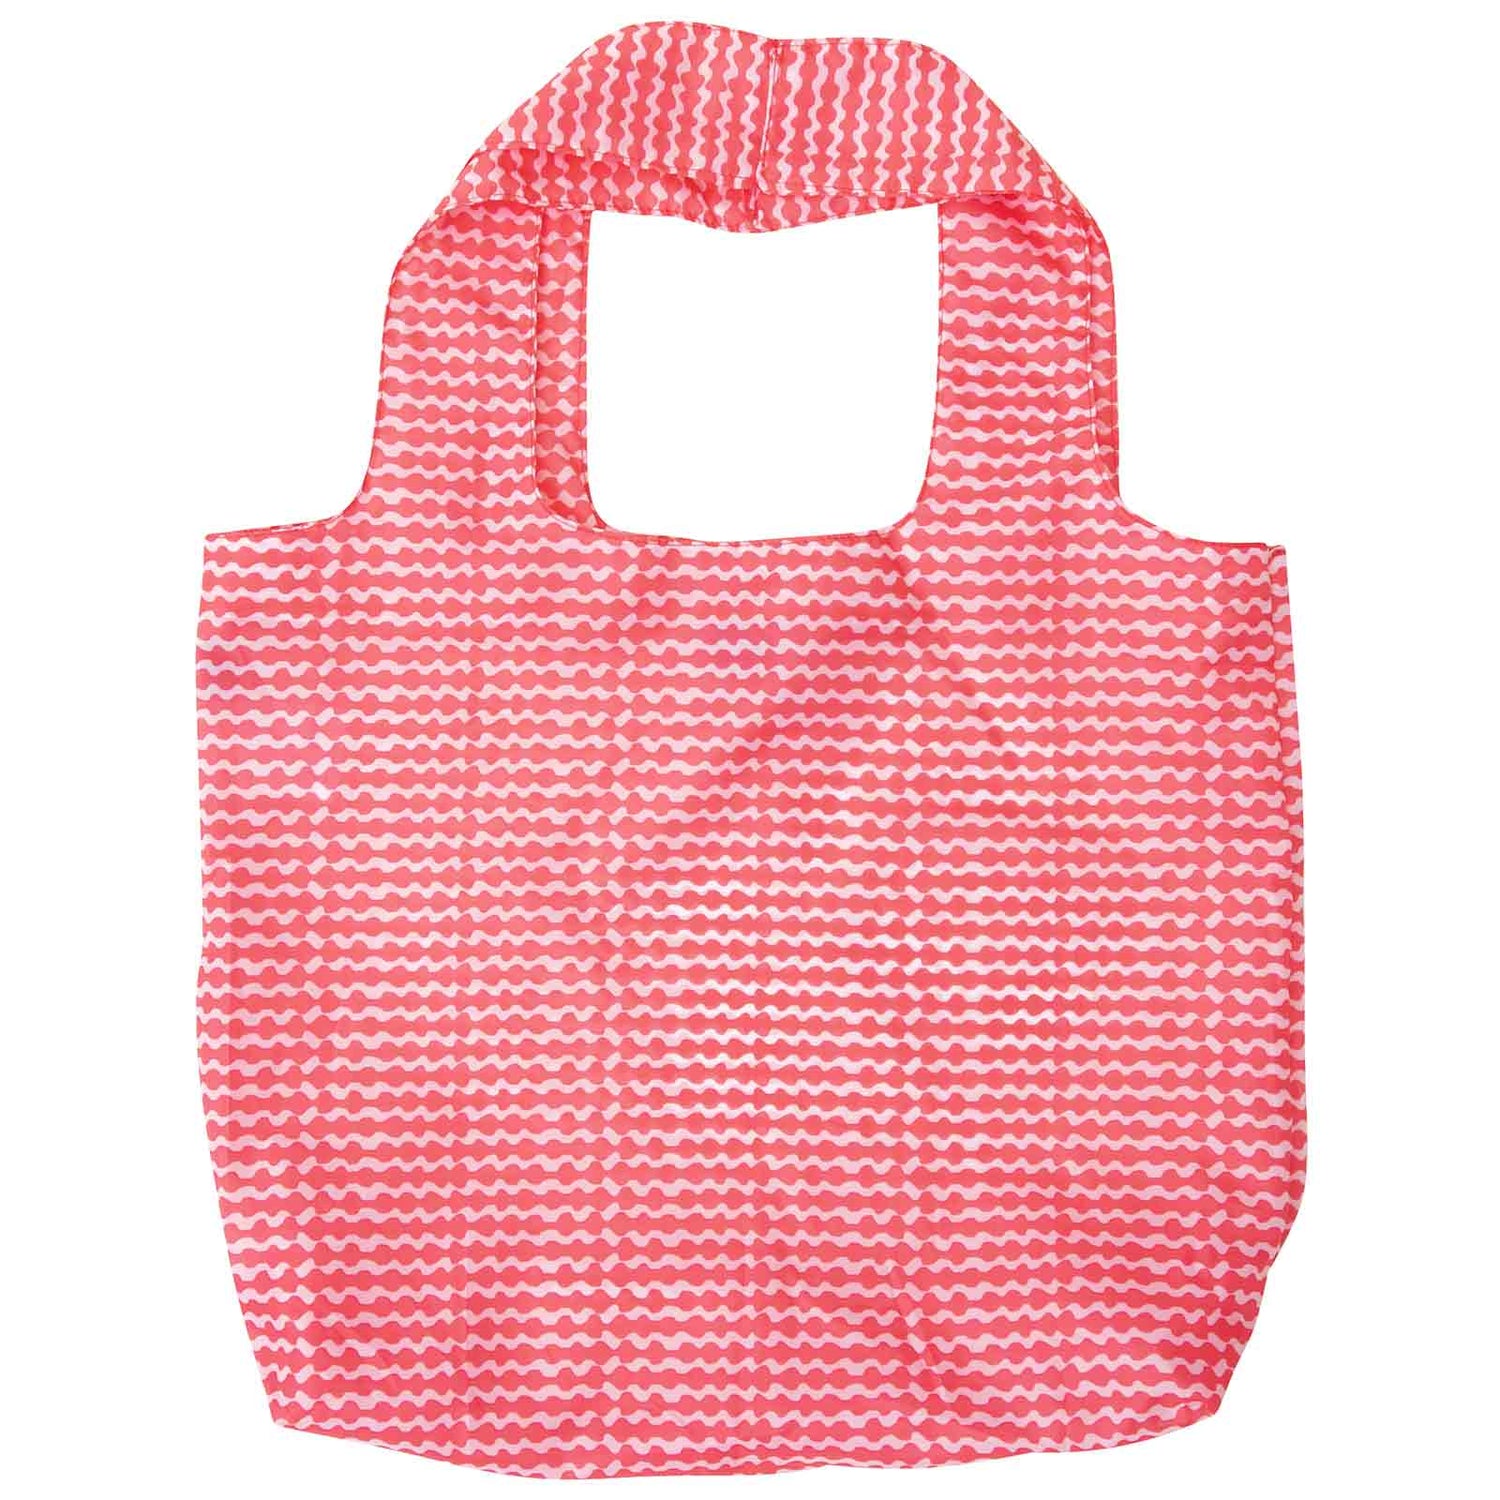  the buti-bag company Reusable Shopping Bags, X-Large